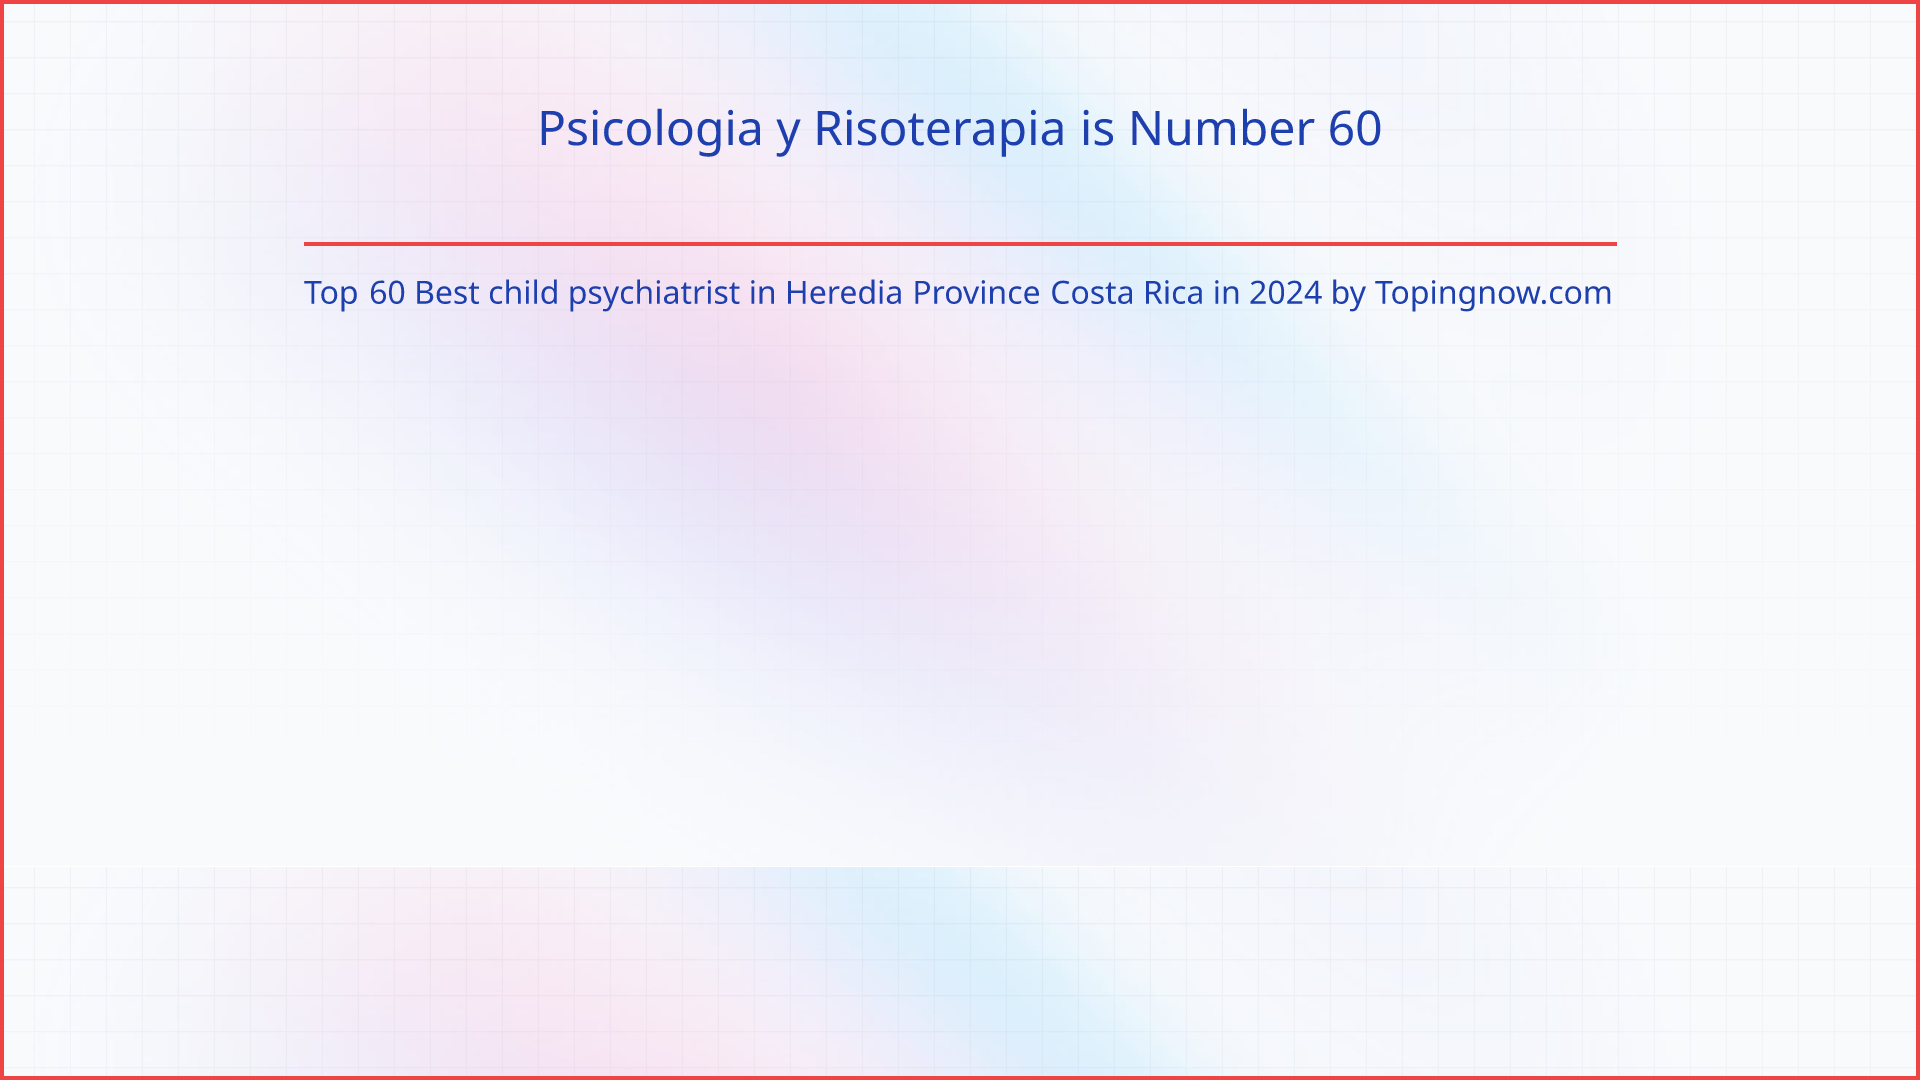 Psicologia y Risoterapia: Top 60 Best child psychiatrist in Heredia Province Costa Rica in 2024